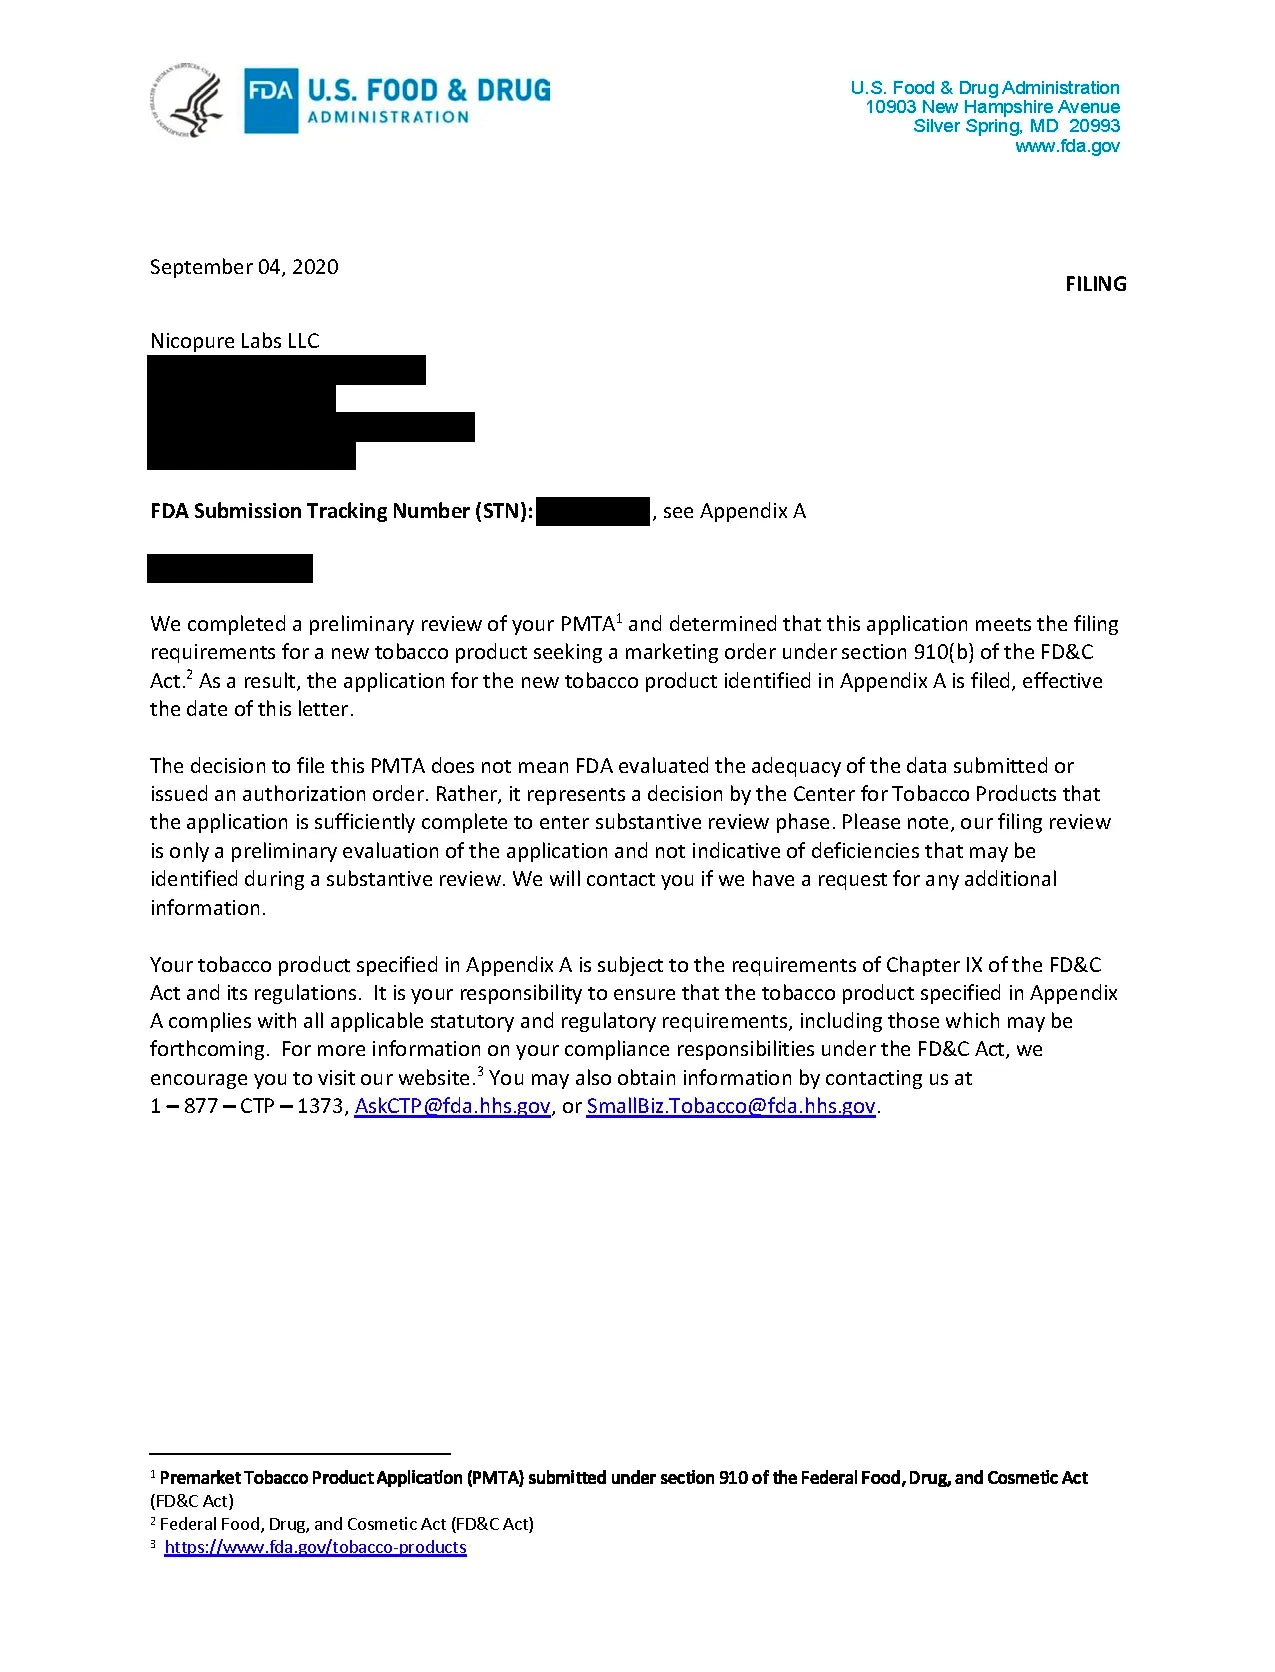 FDA Acceptance Letter 01